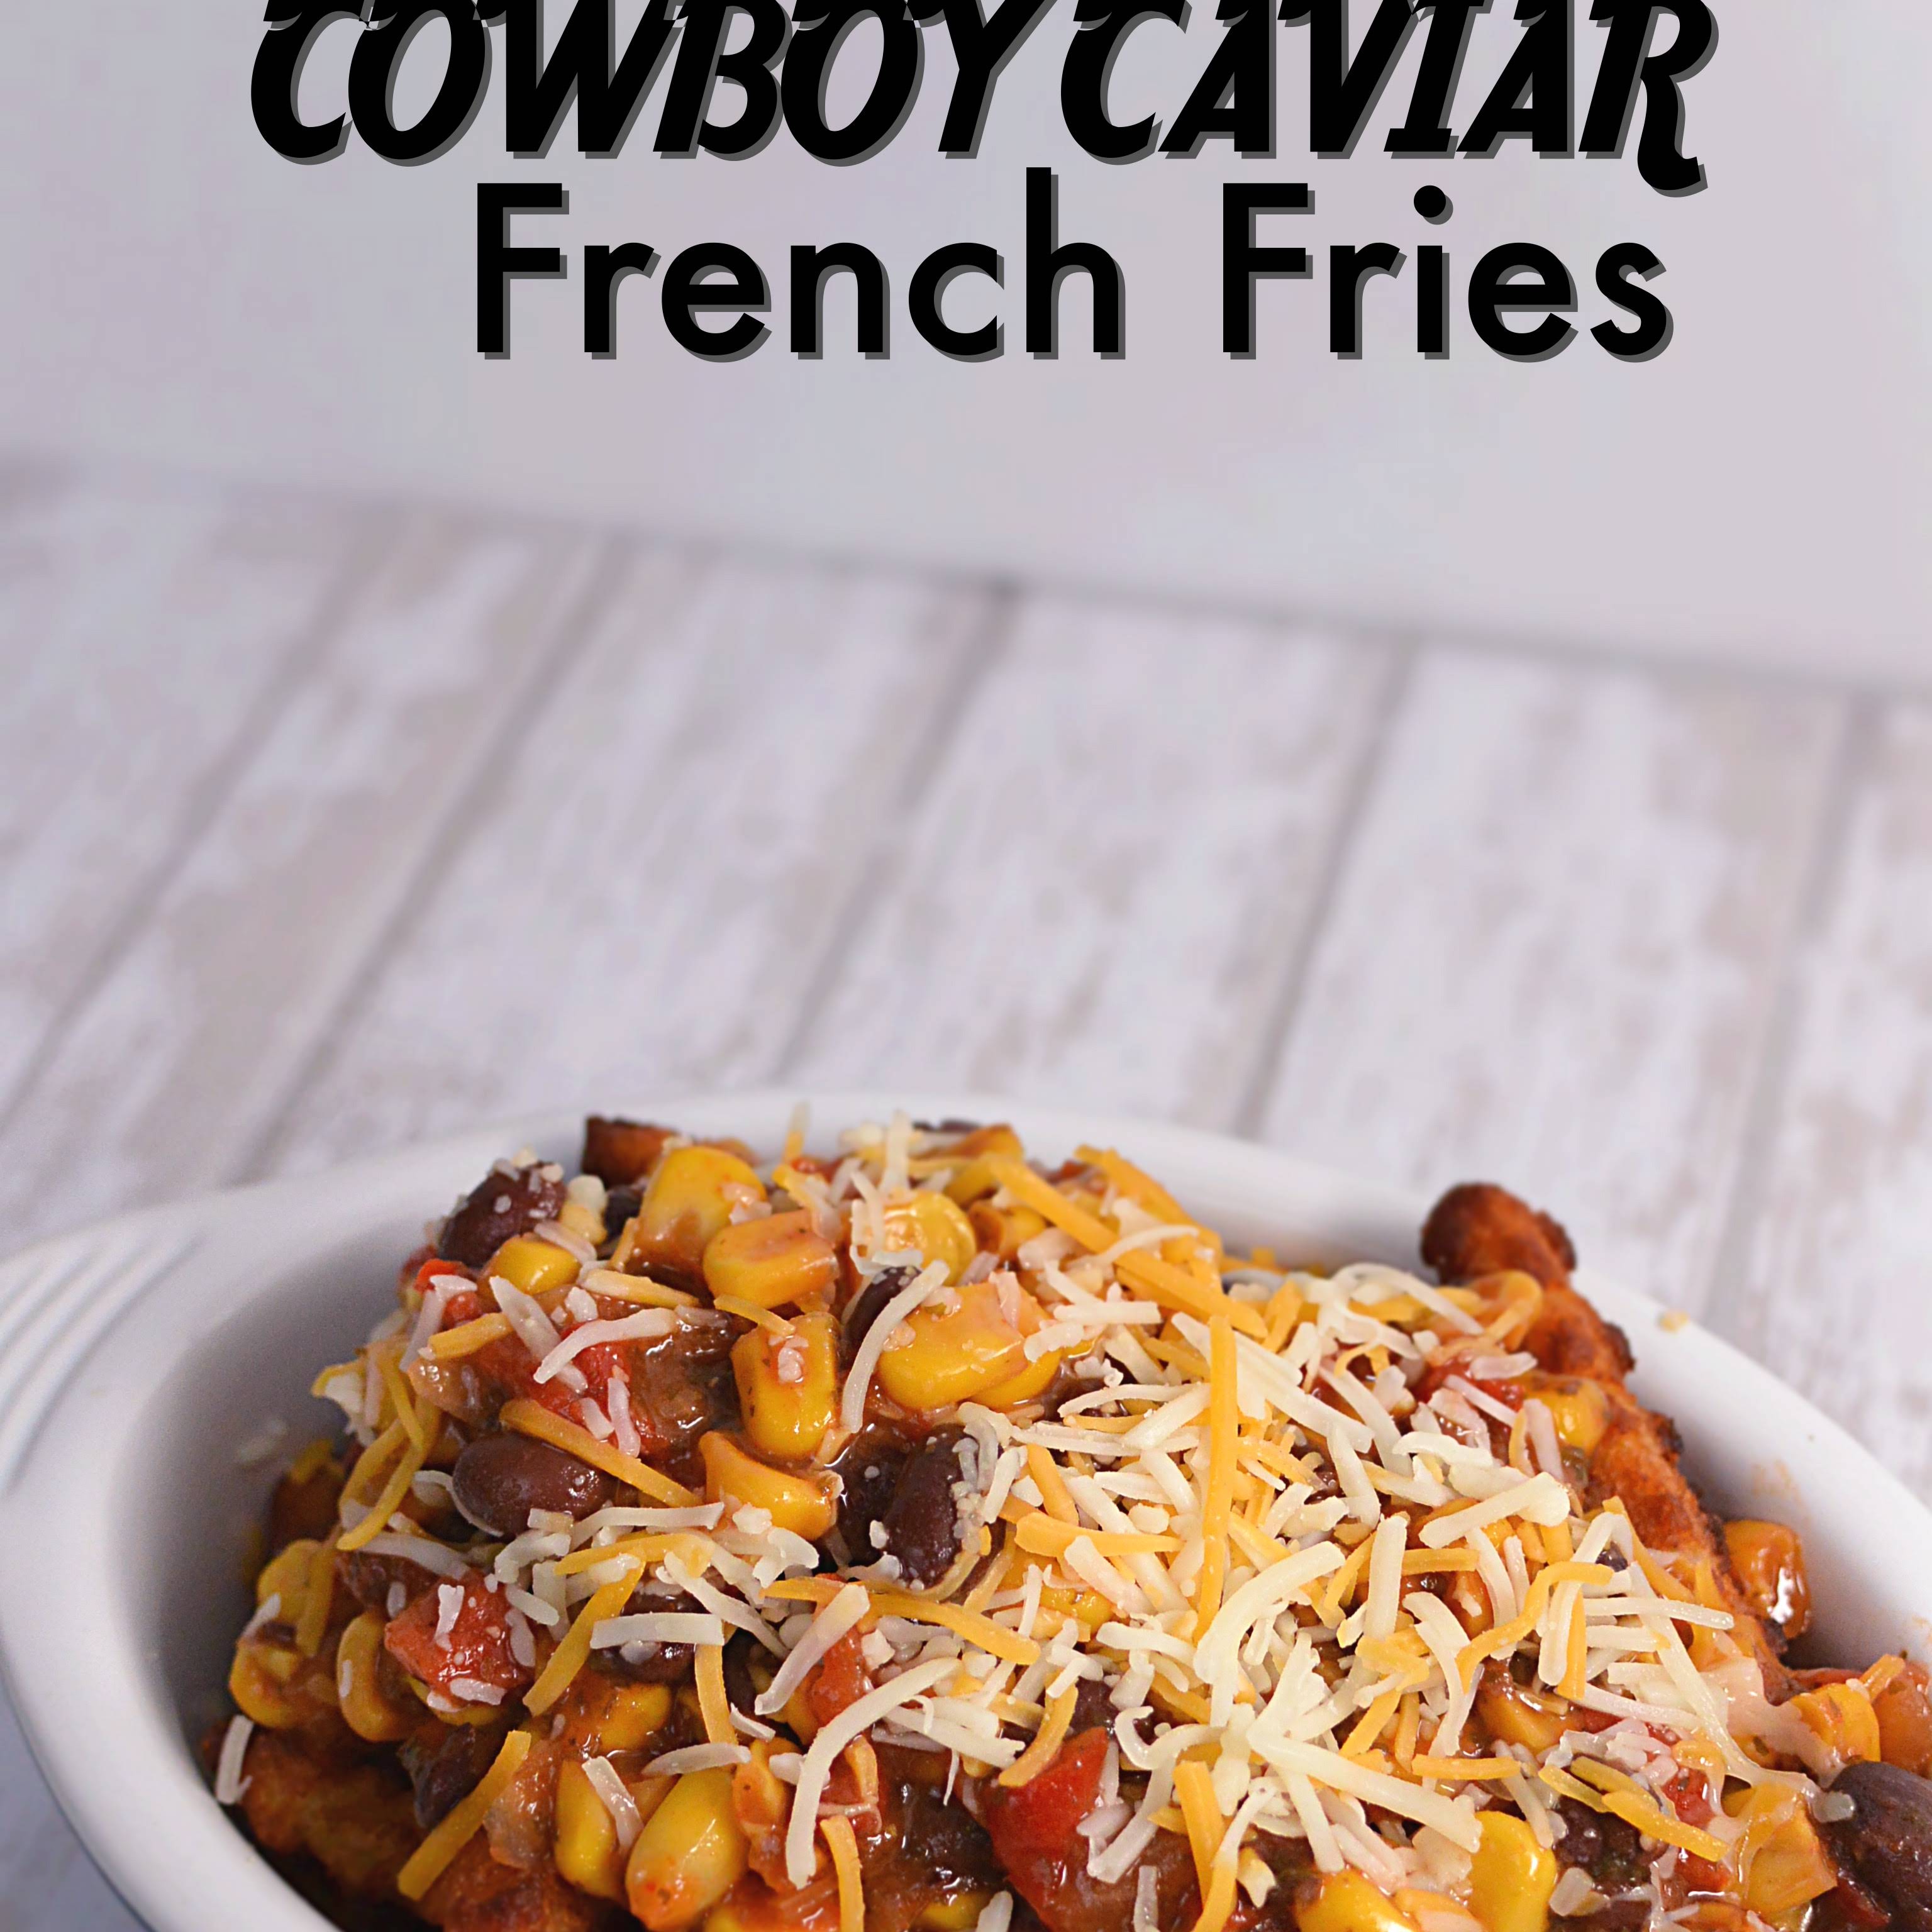 Cowboy Caviar French Fries